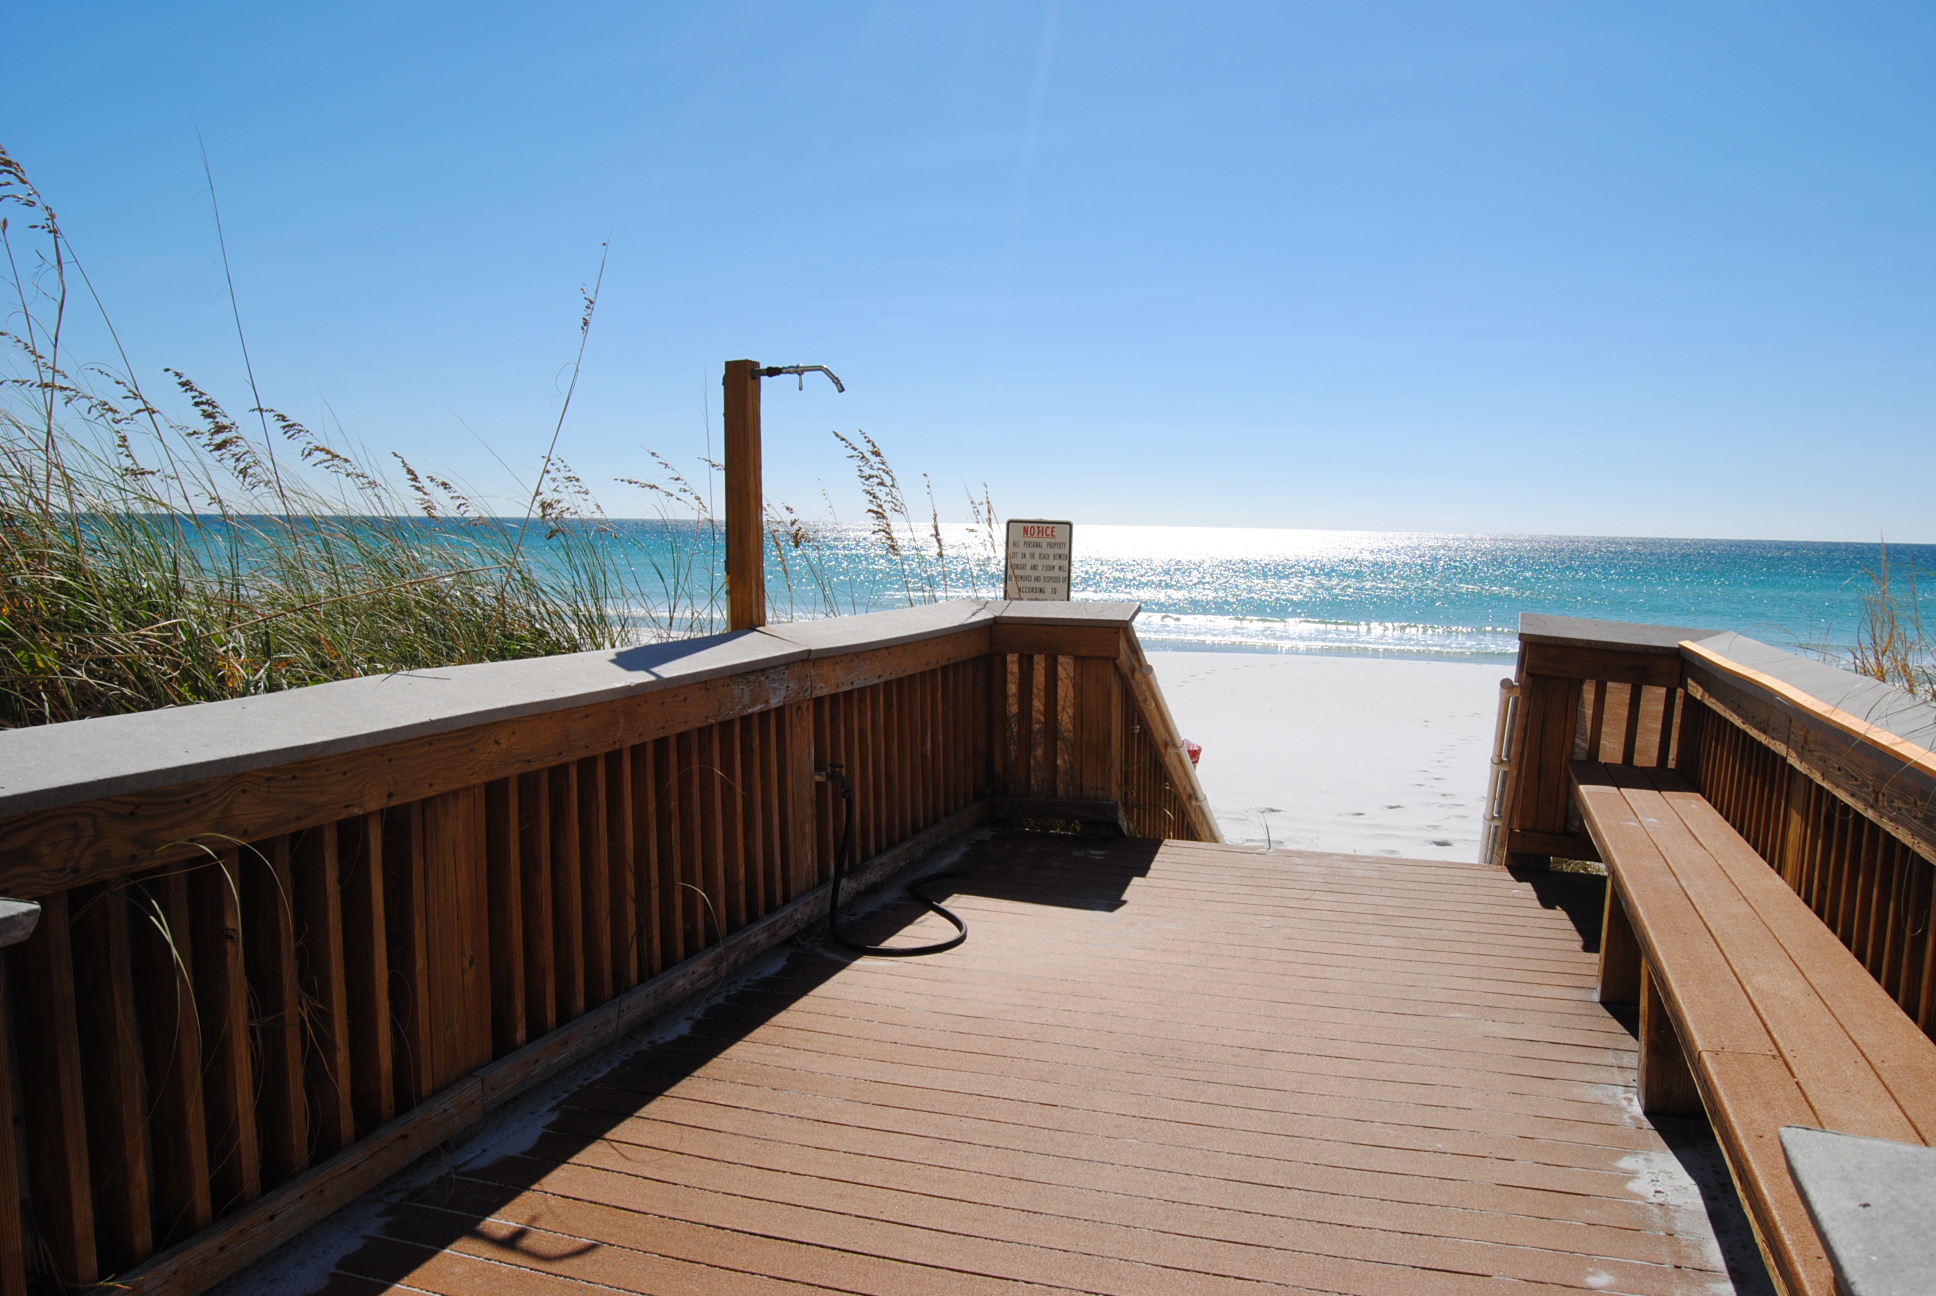 Island Echos Resort Okaloosa Island Fort Walton Beach Destin Florida Beach Vacation Condos by Sunset Resort Rentals